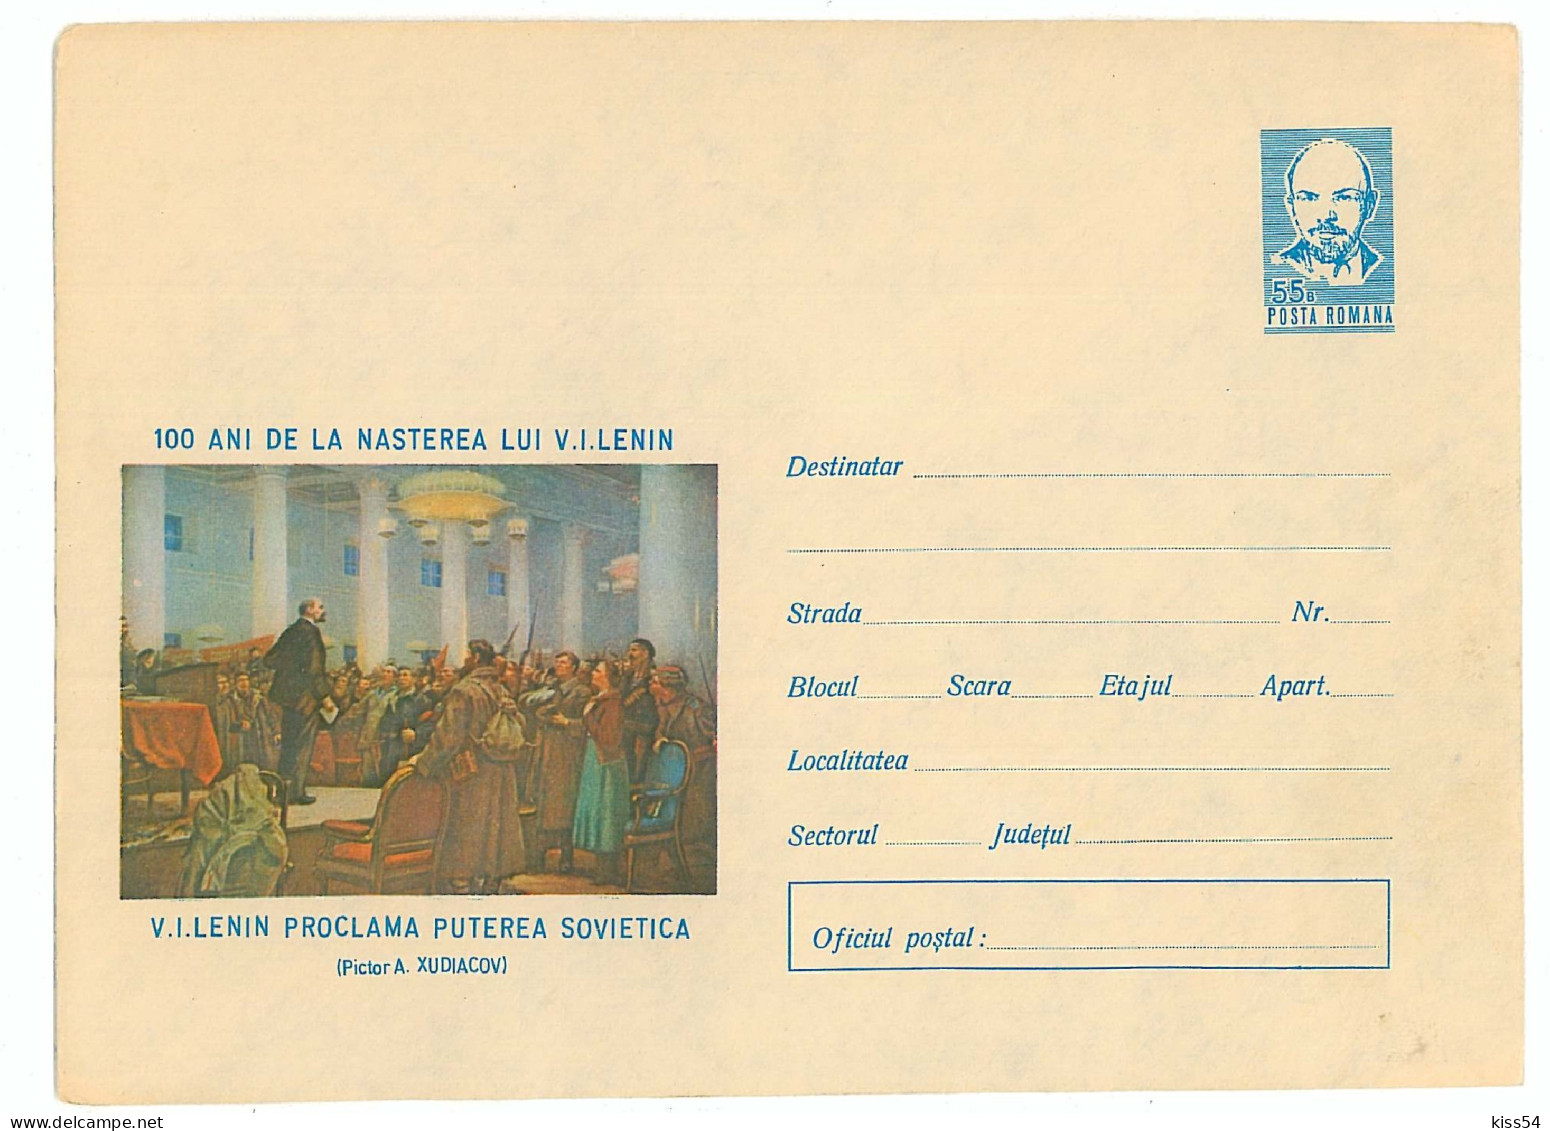 IP 70 - 513 LENIN, Romania - Stationery - Unused - 1970 - Lenin